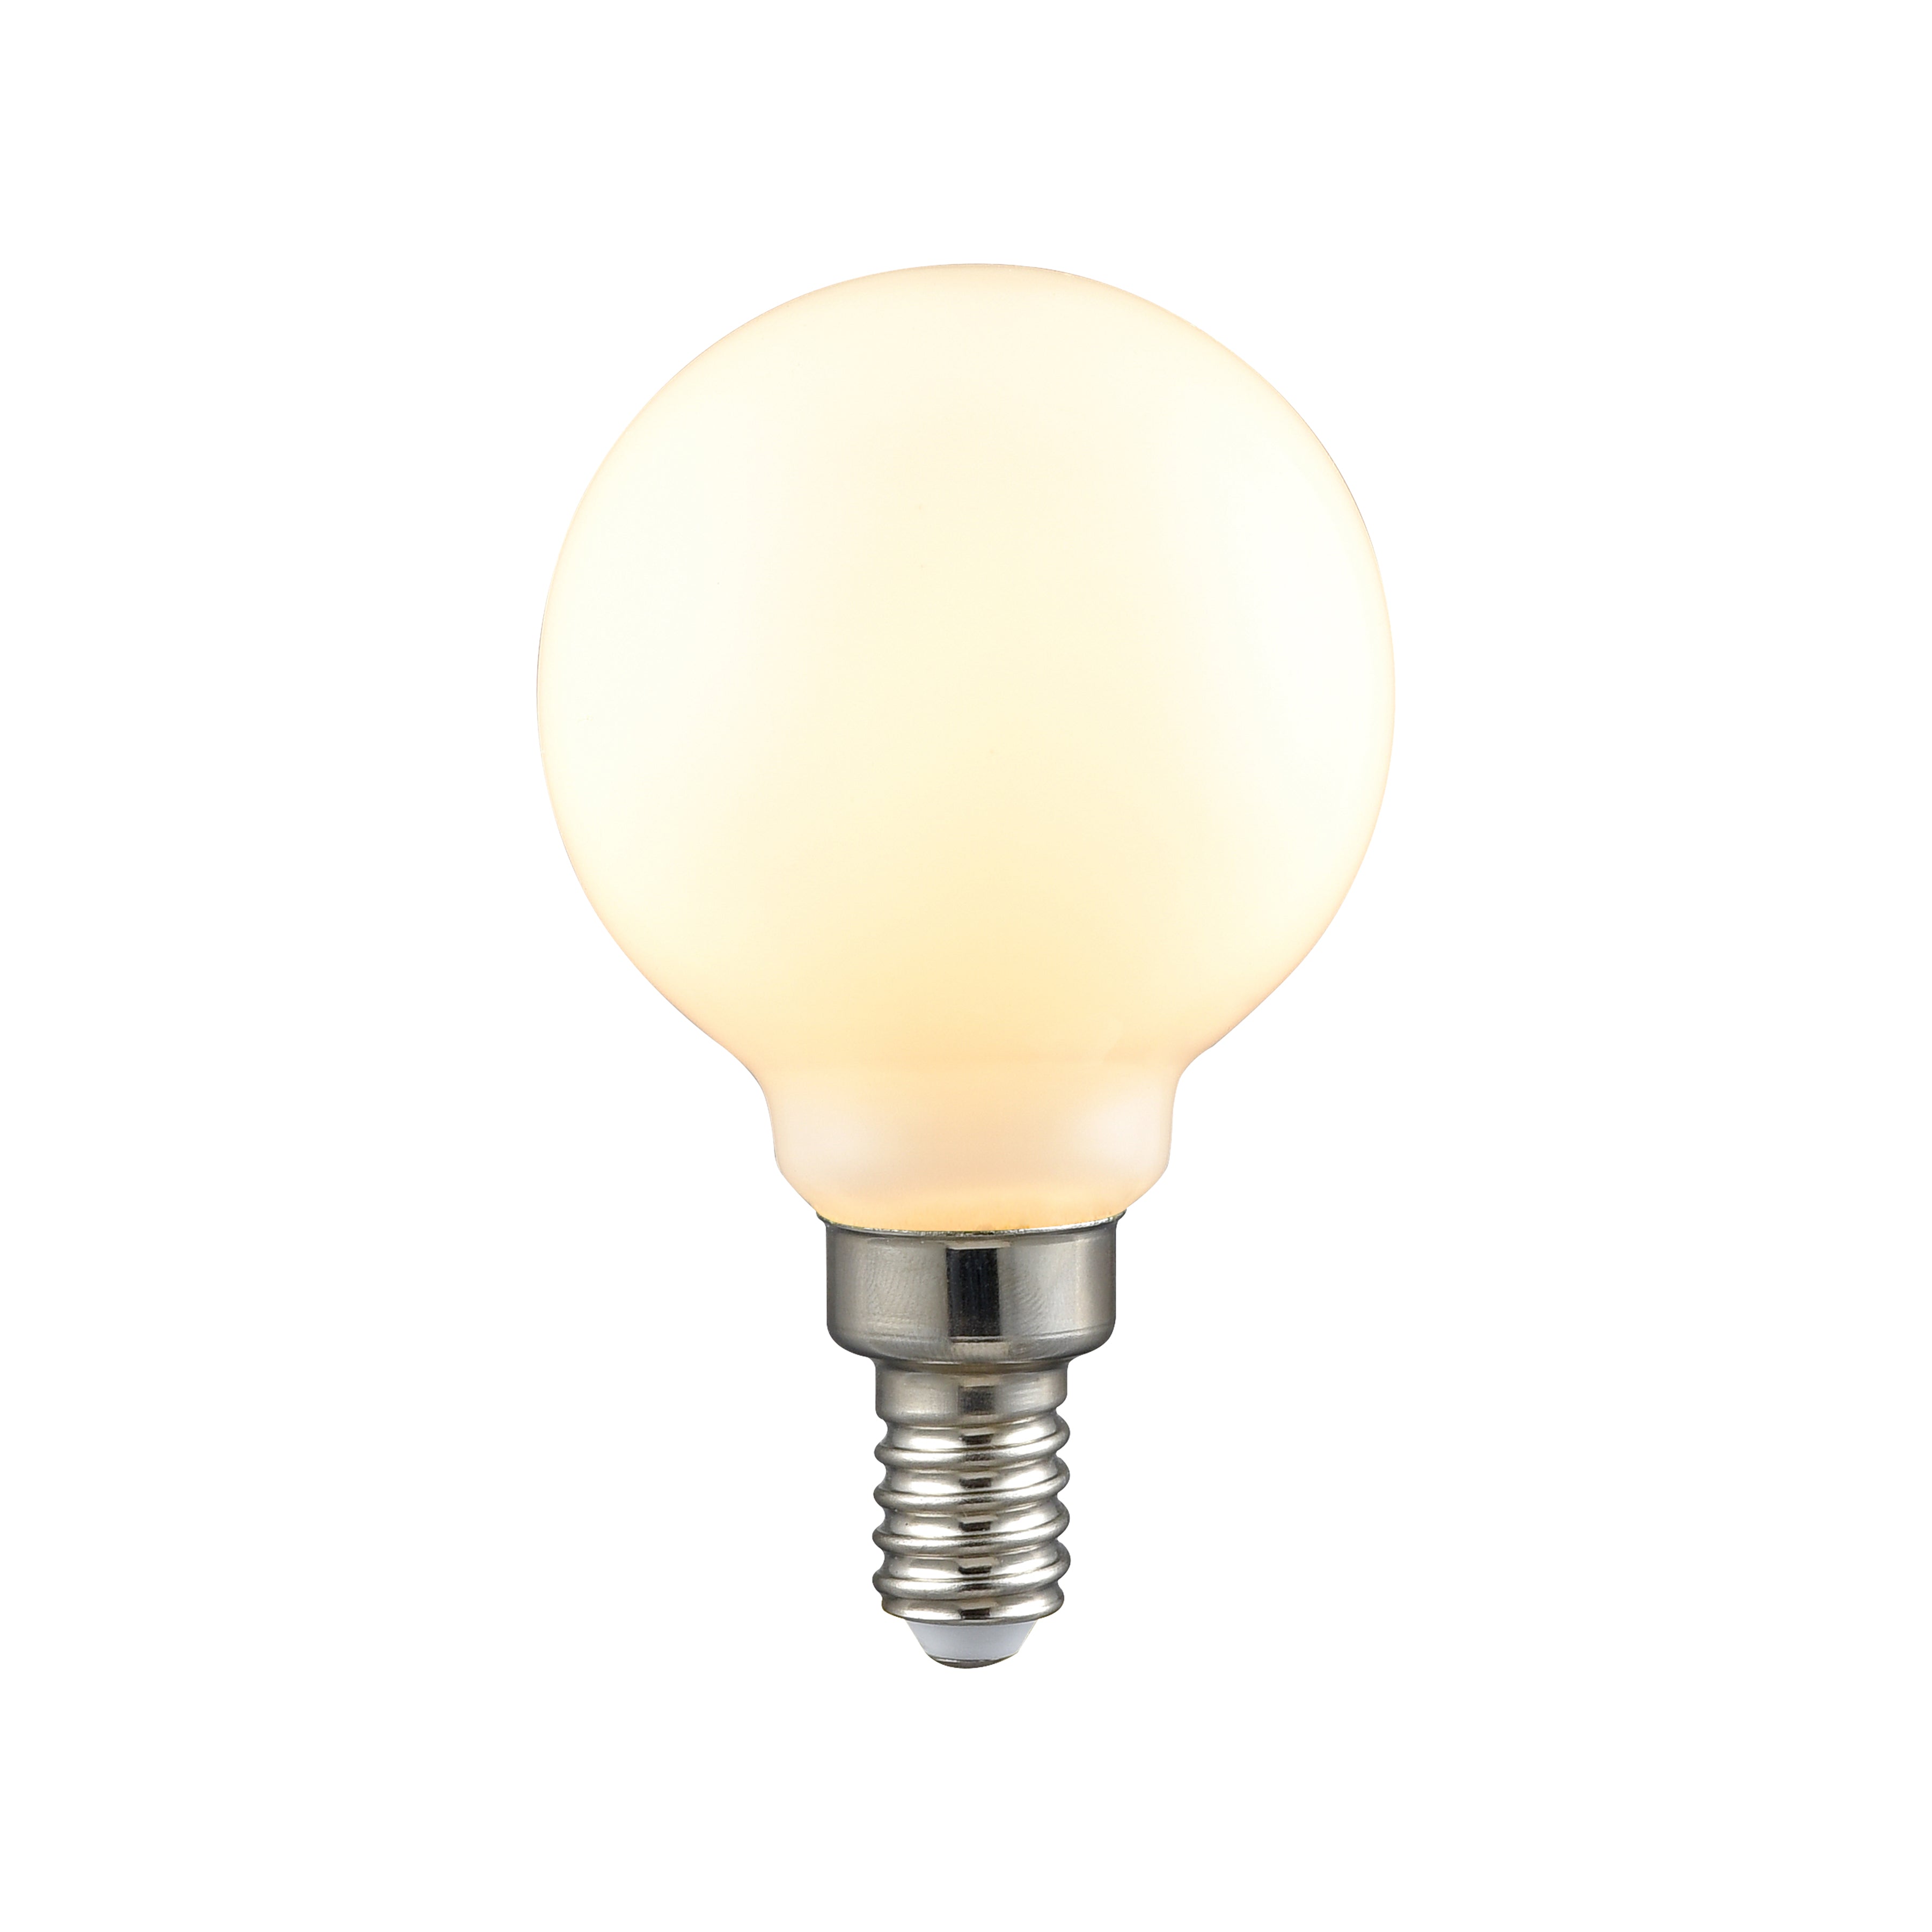 LED Candelabra Bulb - Shape G16.5, Base E12, 2700K - Frosted